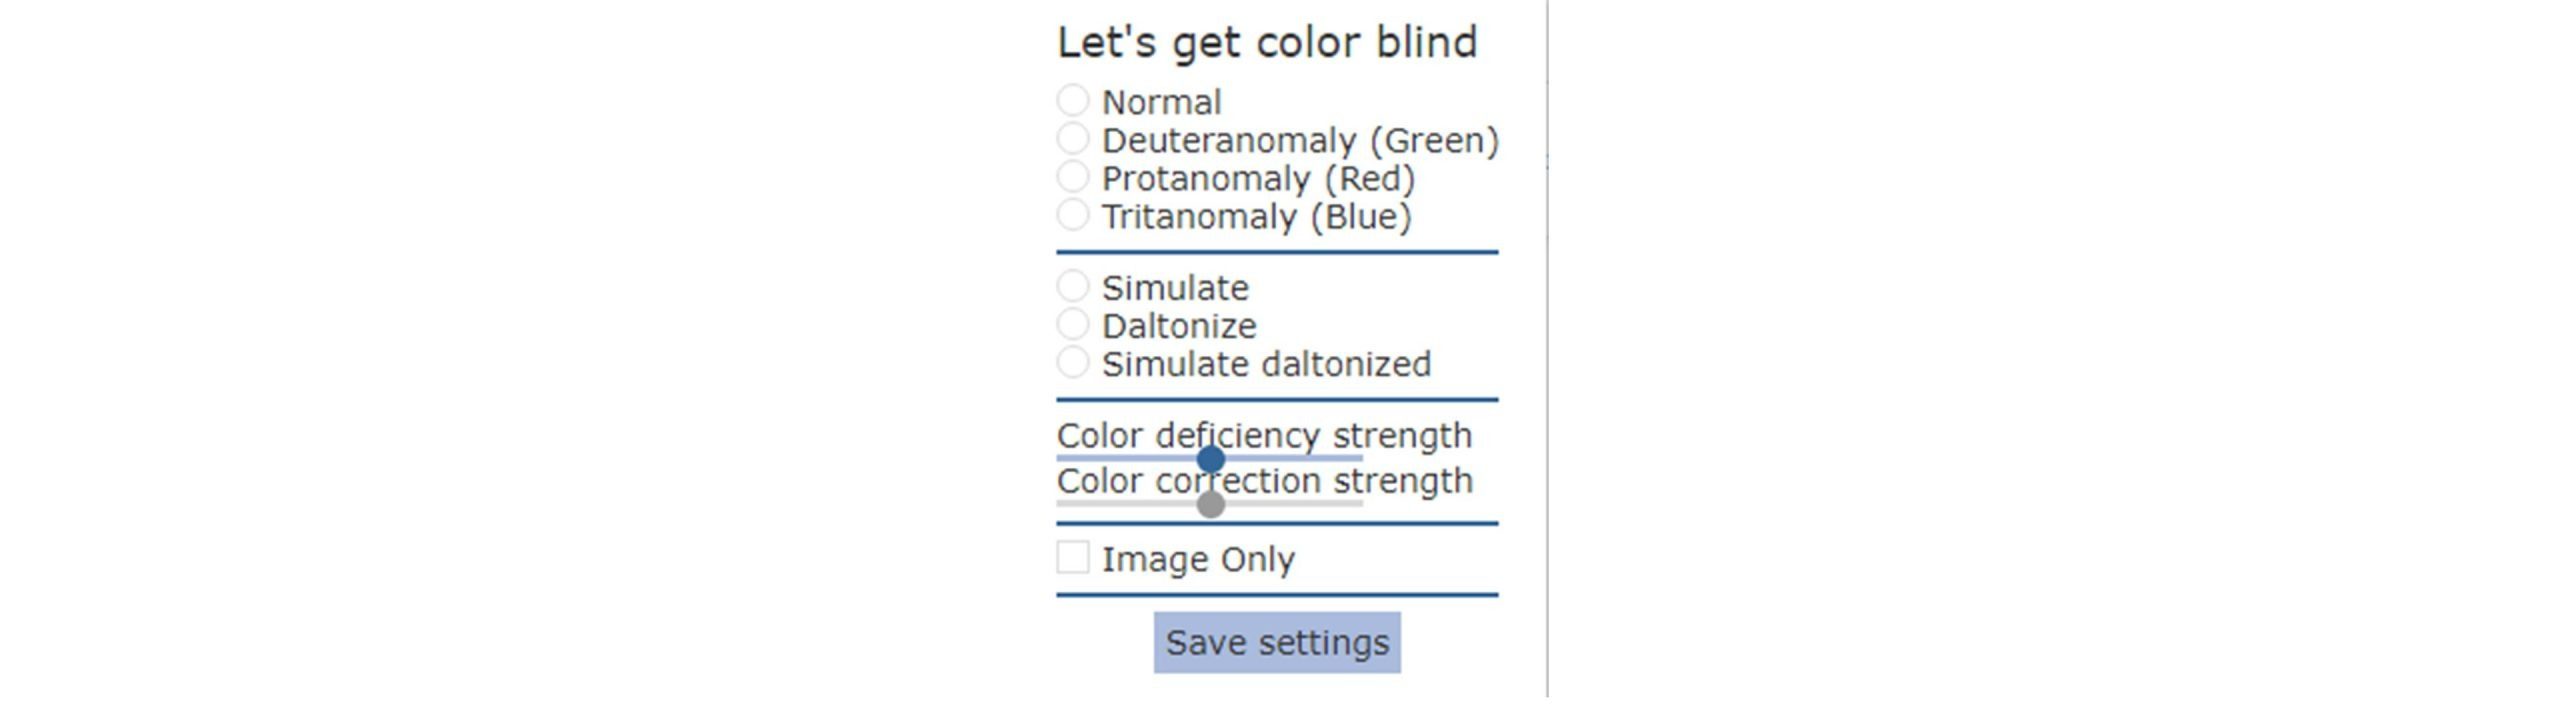 screenshot of Google Slides accessibility add-in Let's get color blind